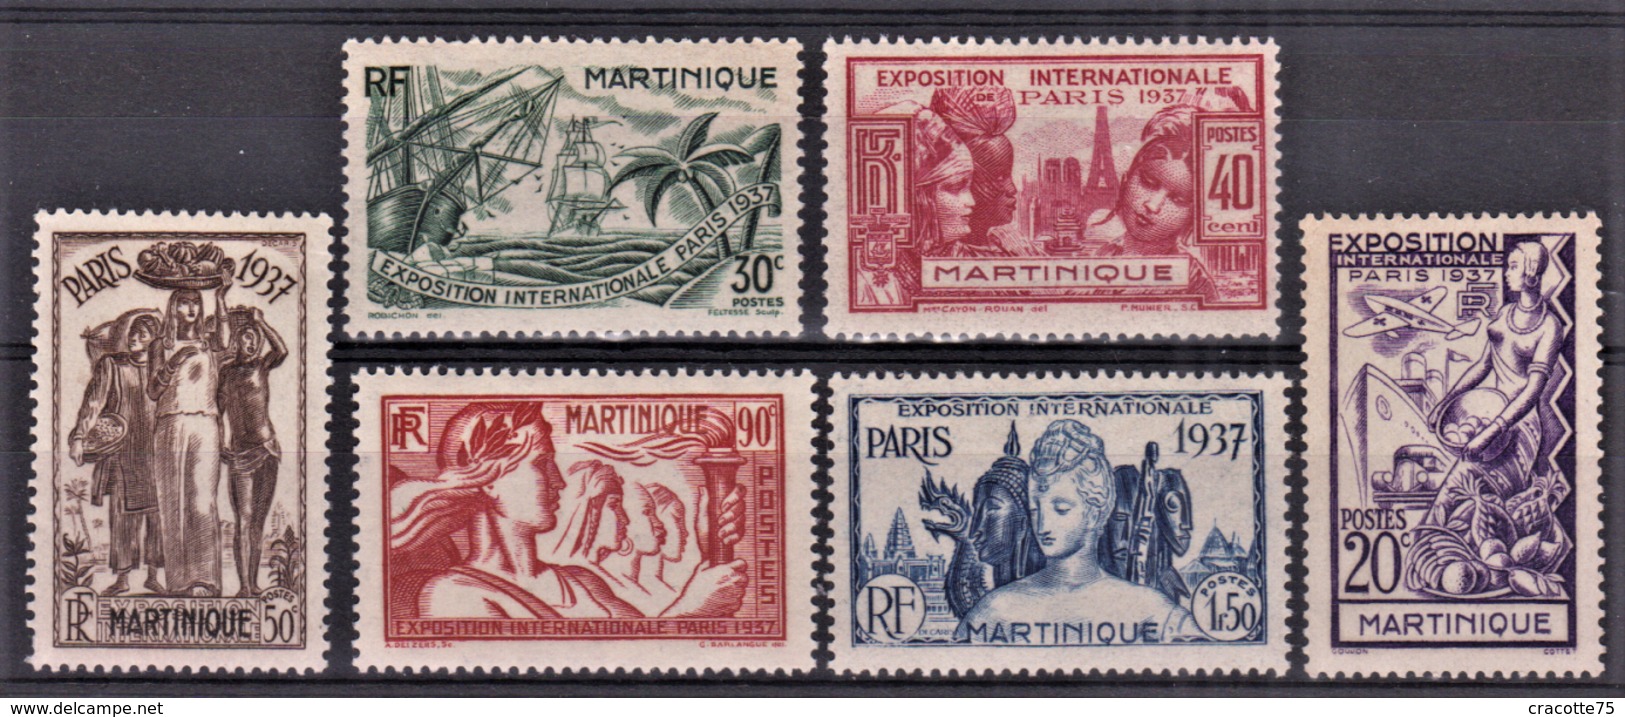 MARTINIQUE - N° 161/166**- EXPOSITION INTERNATIONALE 1937 PARIS - SERIE COMPLETE LUXE. - 1937 Exposition Internationale De Paris